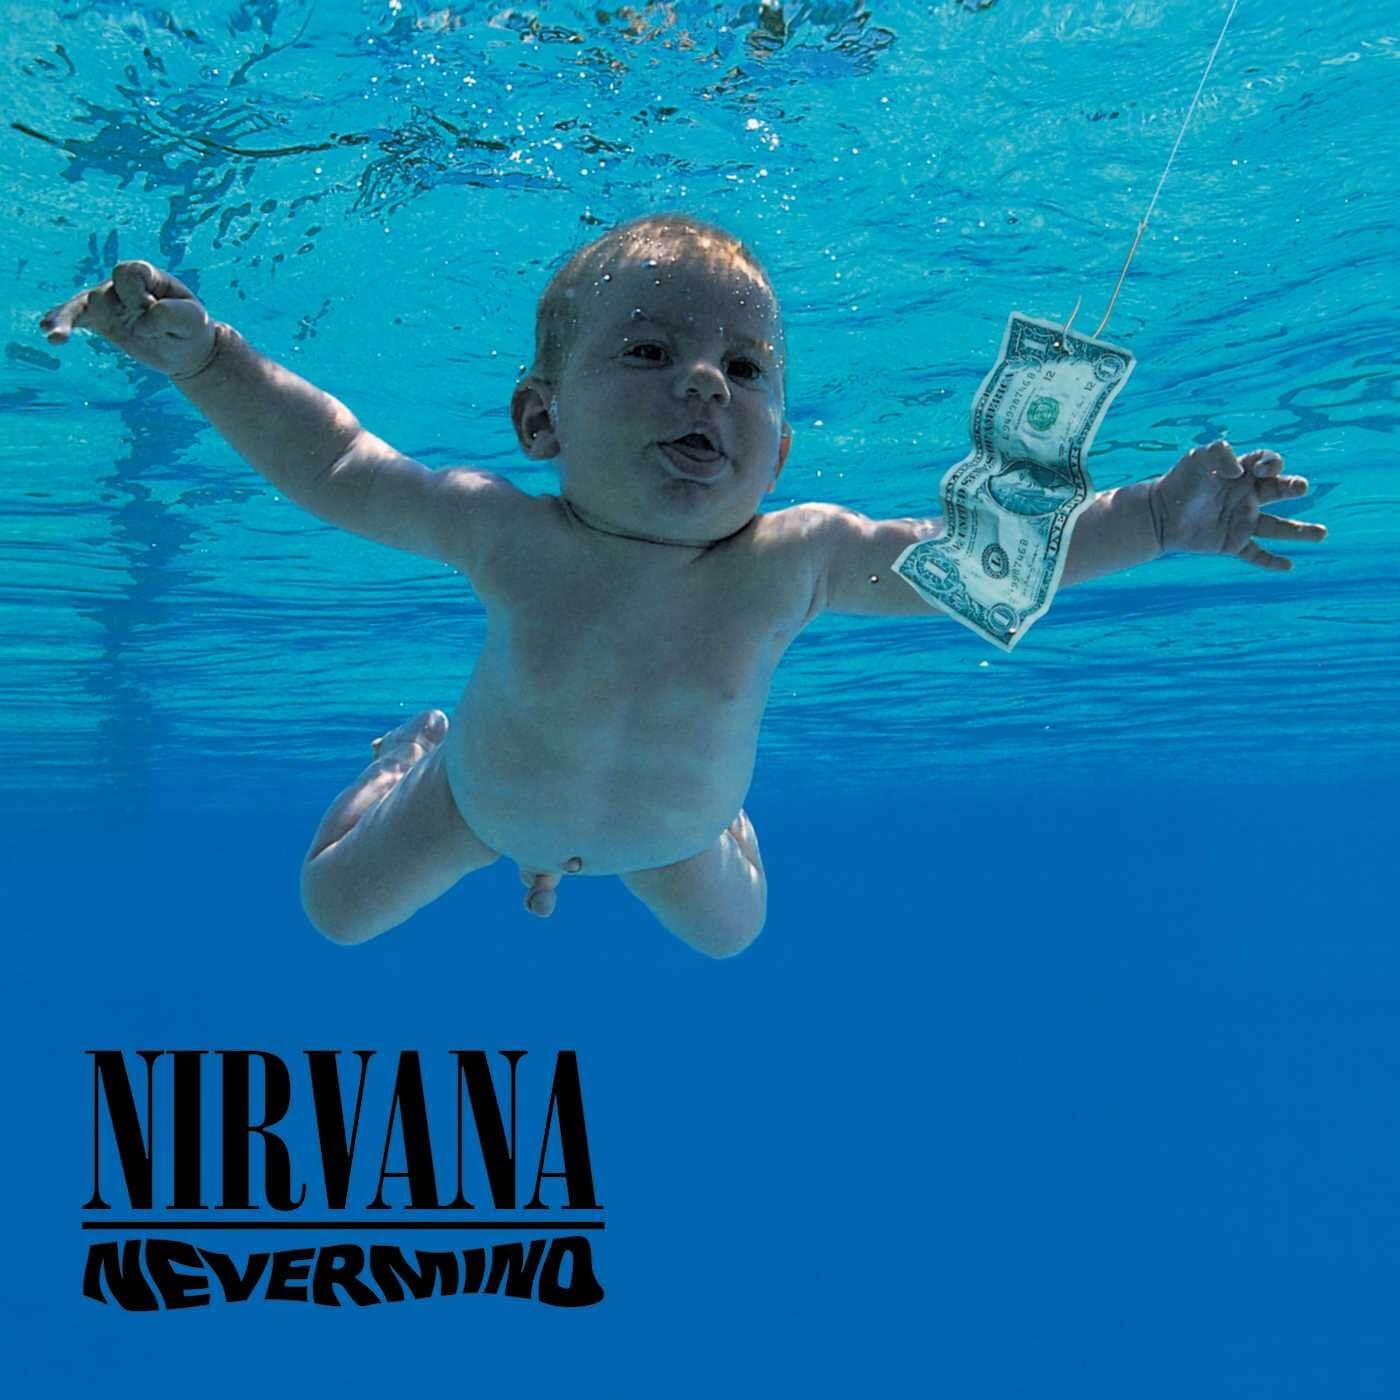 Nirvana "Nevermind" Album-Cover